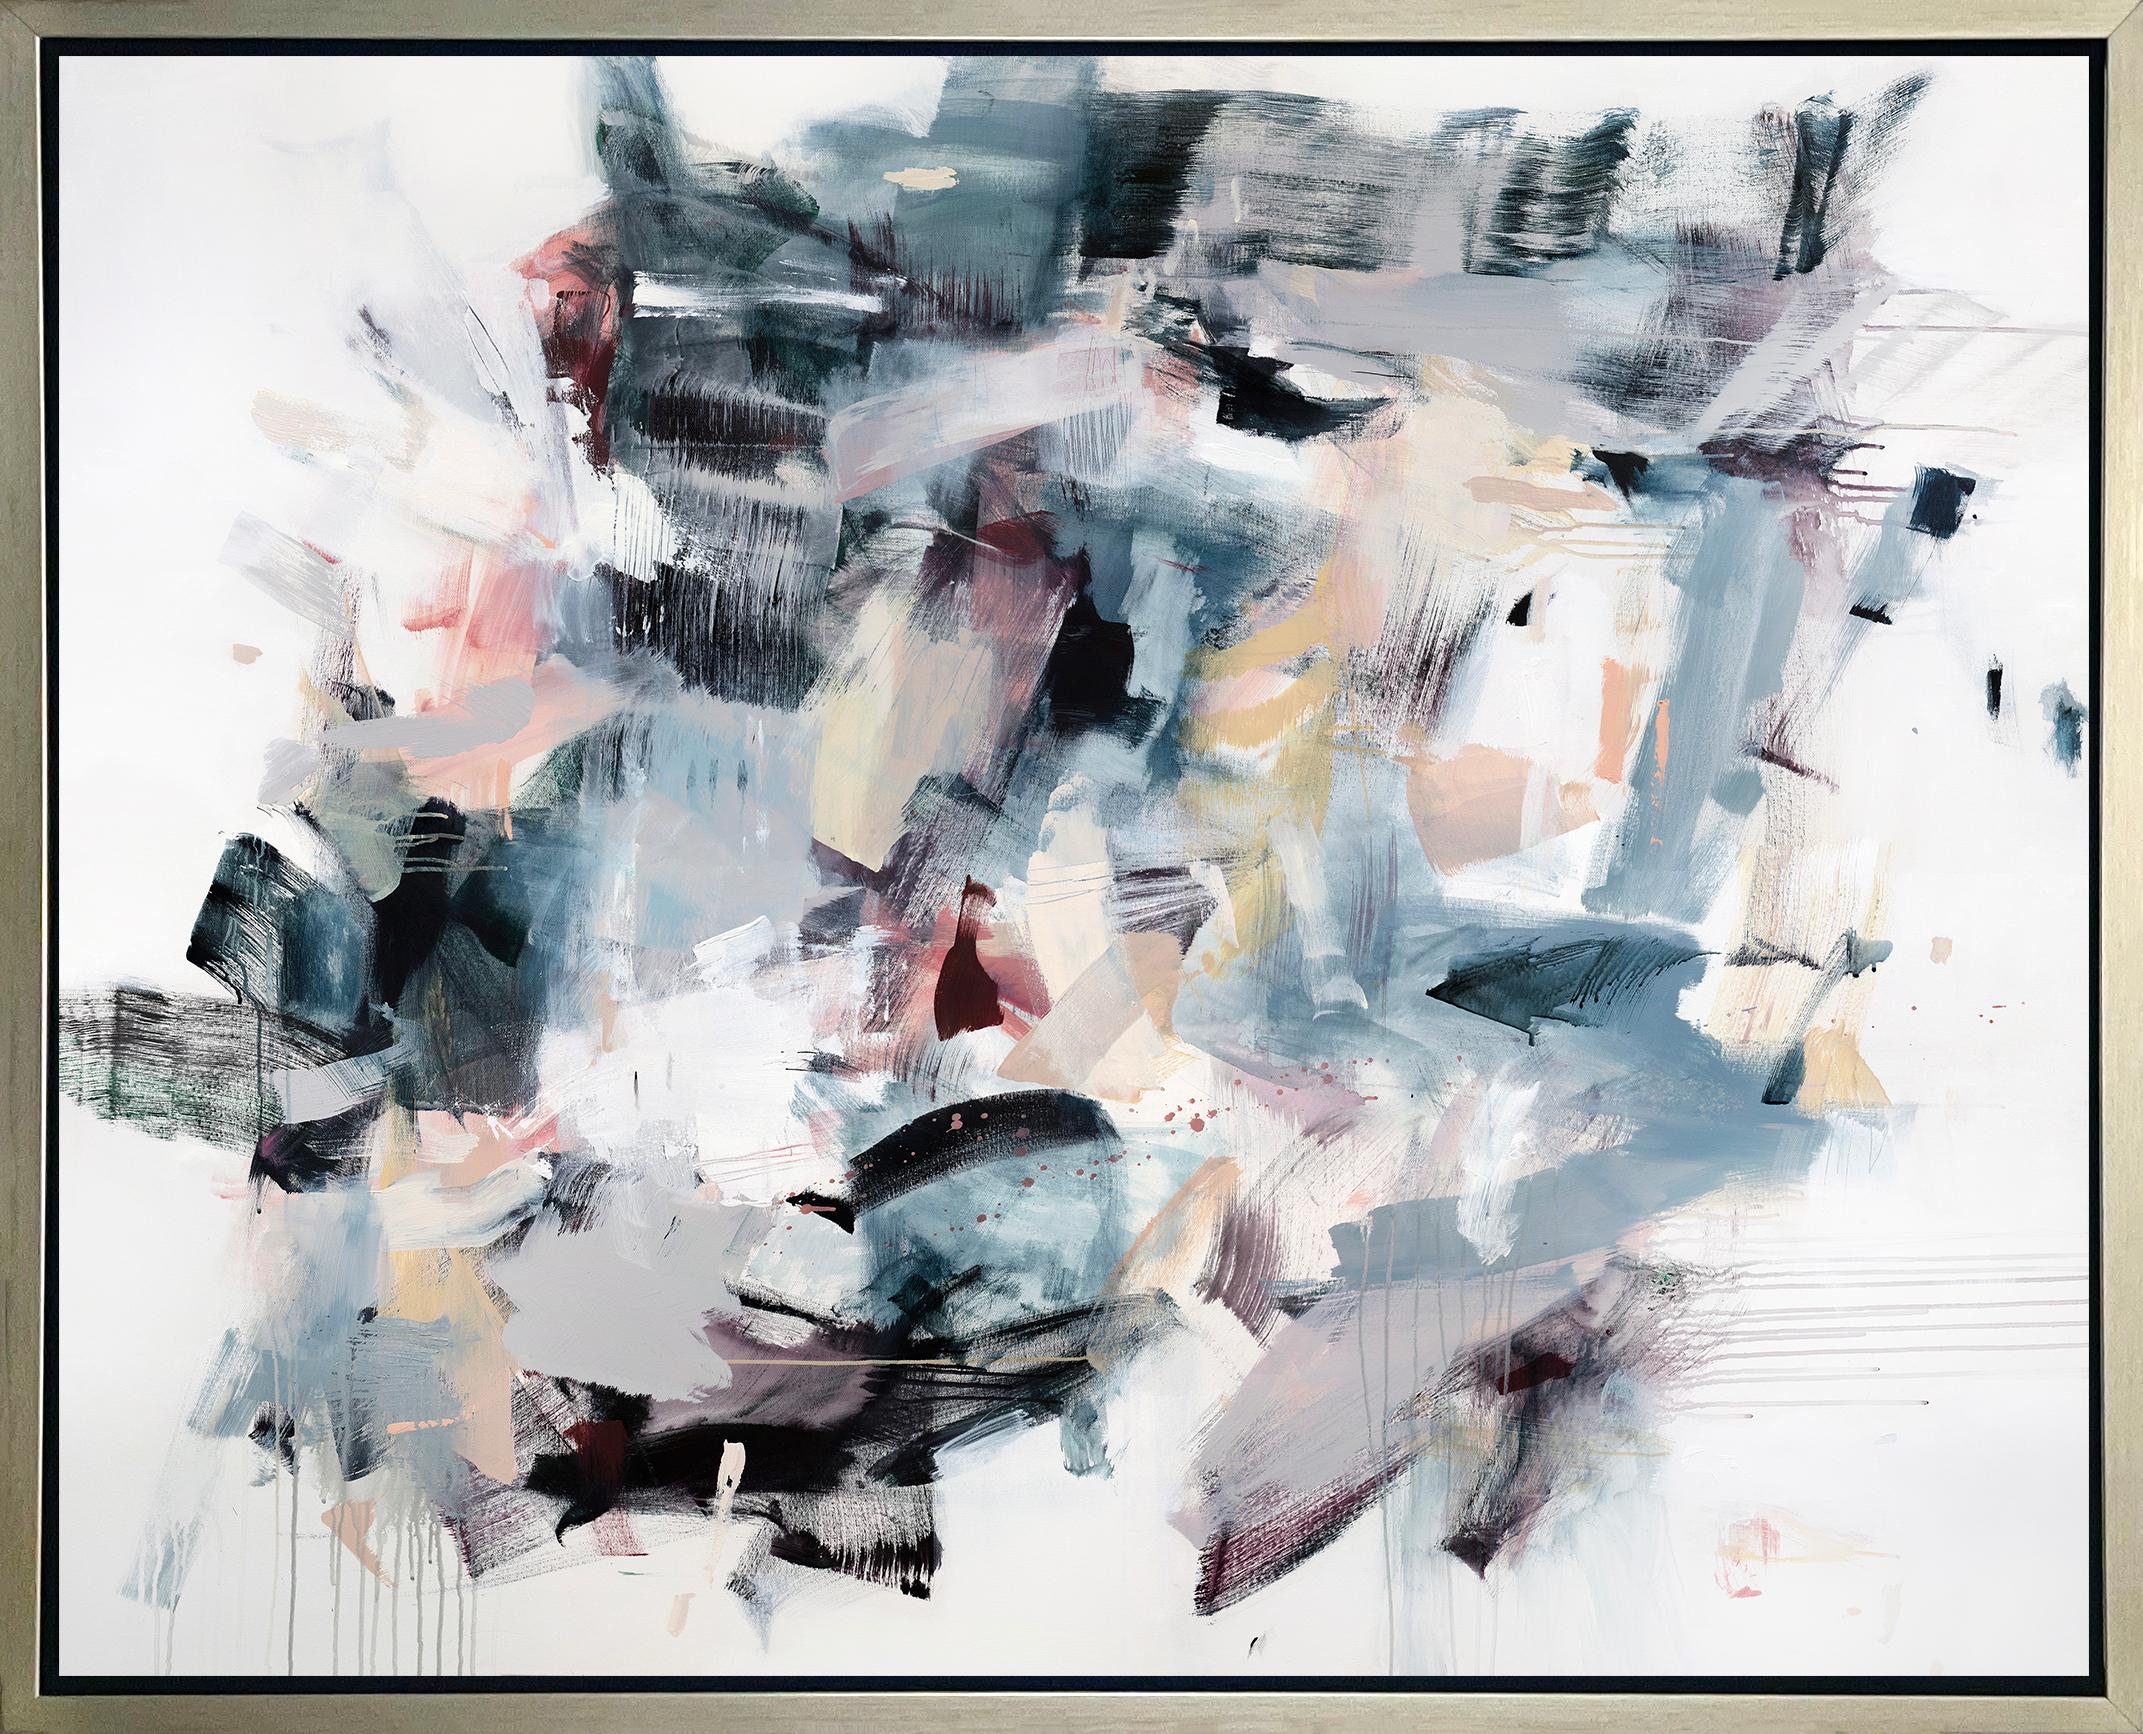 Kelly Rossetti Abstract Print – ""Serotonin Overflow", gerahmter Giclee-Druck in limitierter Auflage, 40"" x 50""